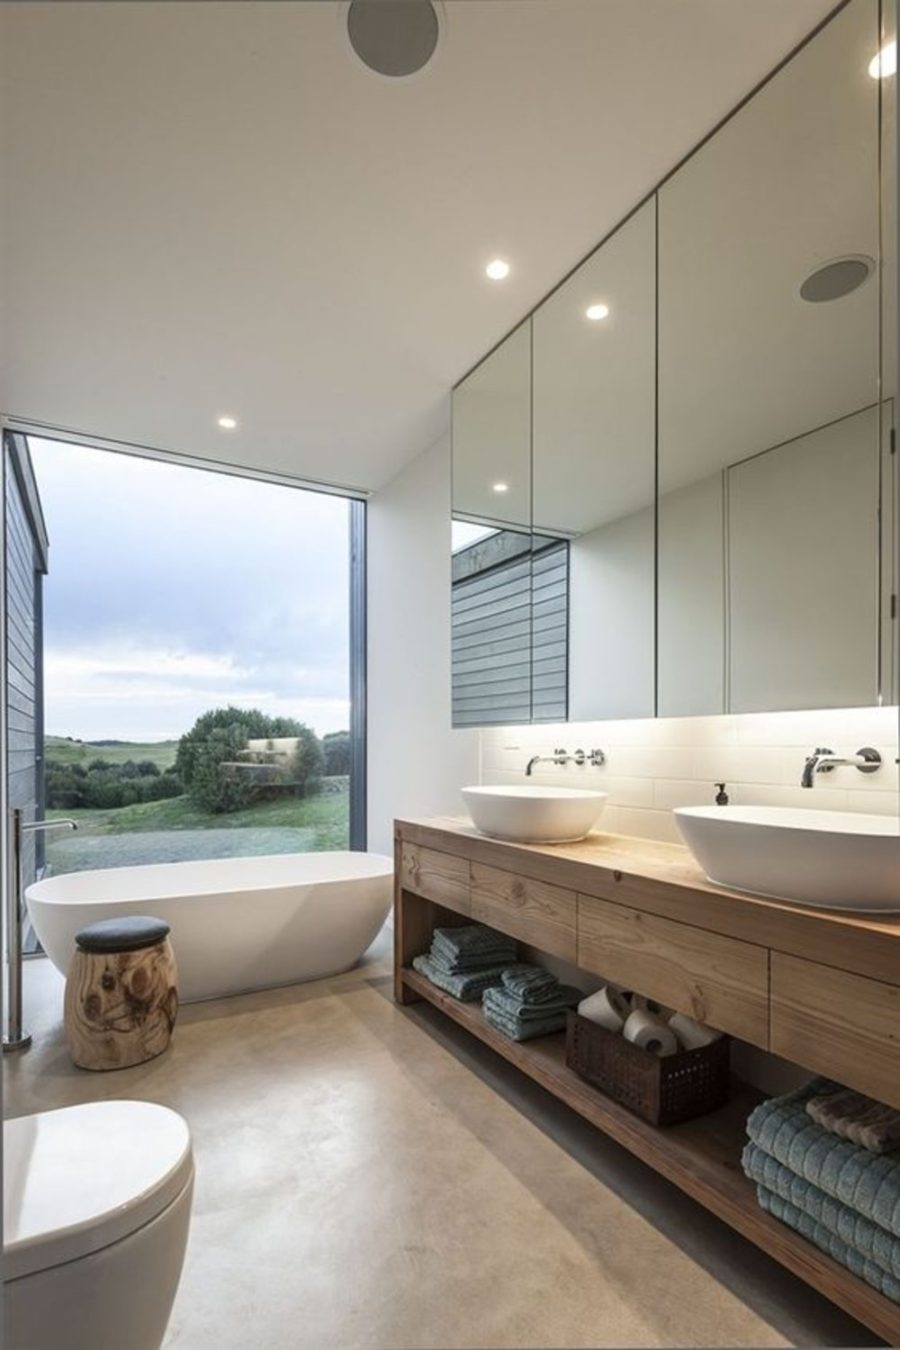 Big Bathroom Mirror Trend in Real Interiors